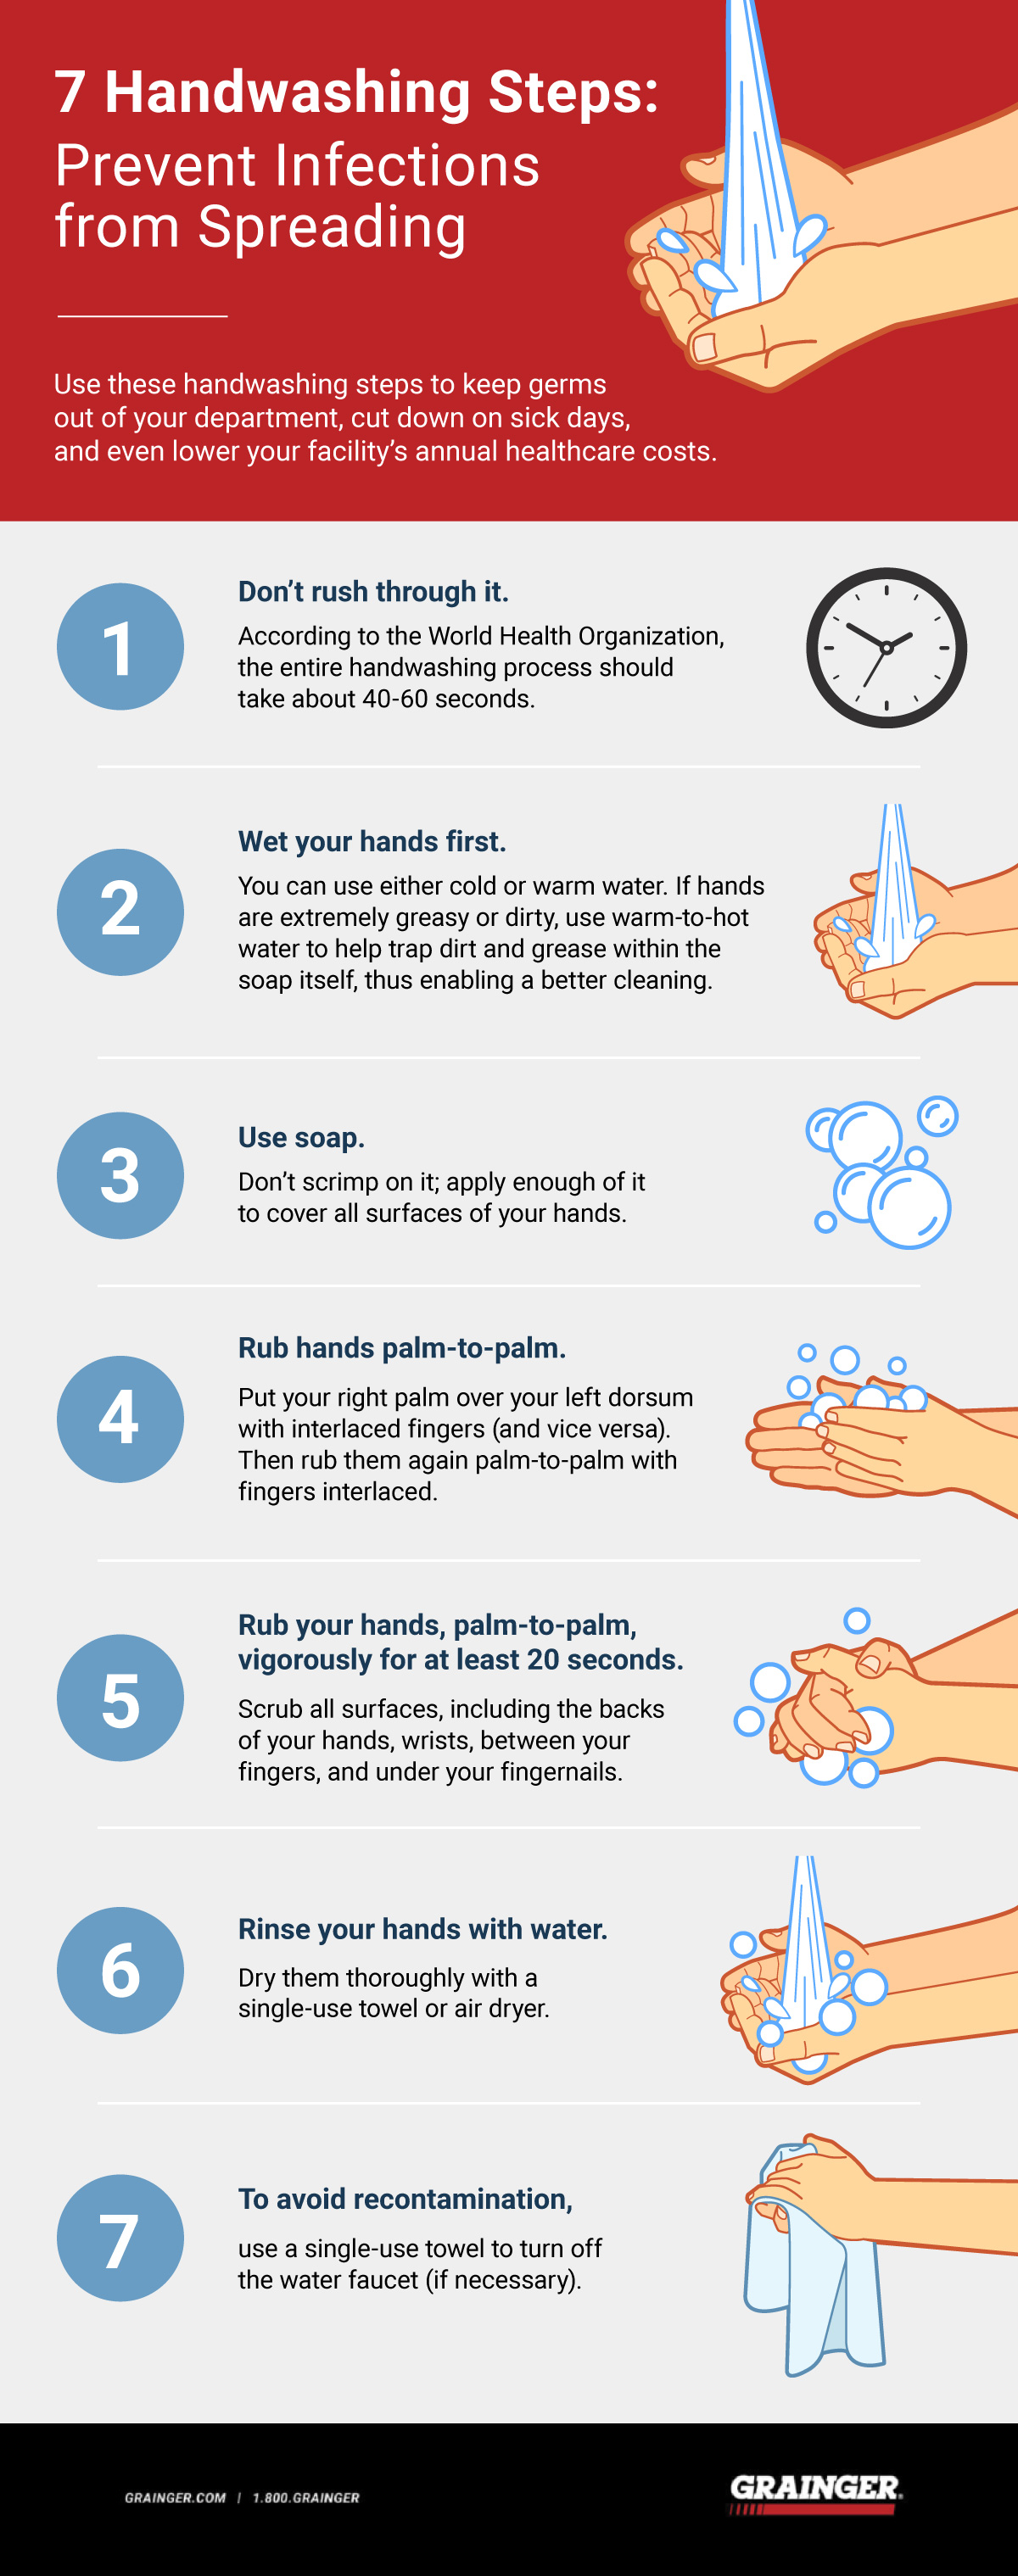 7 Handwashing Steps to Prevent Infections - Grainger ...